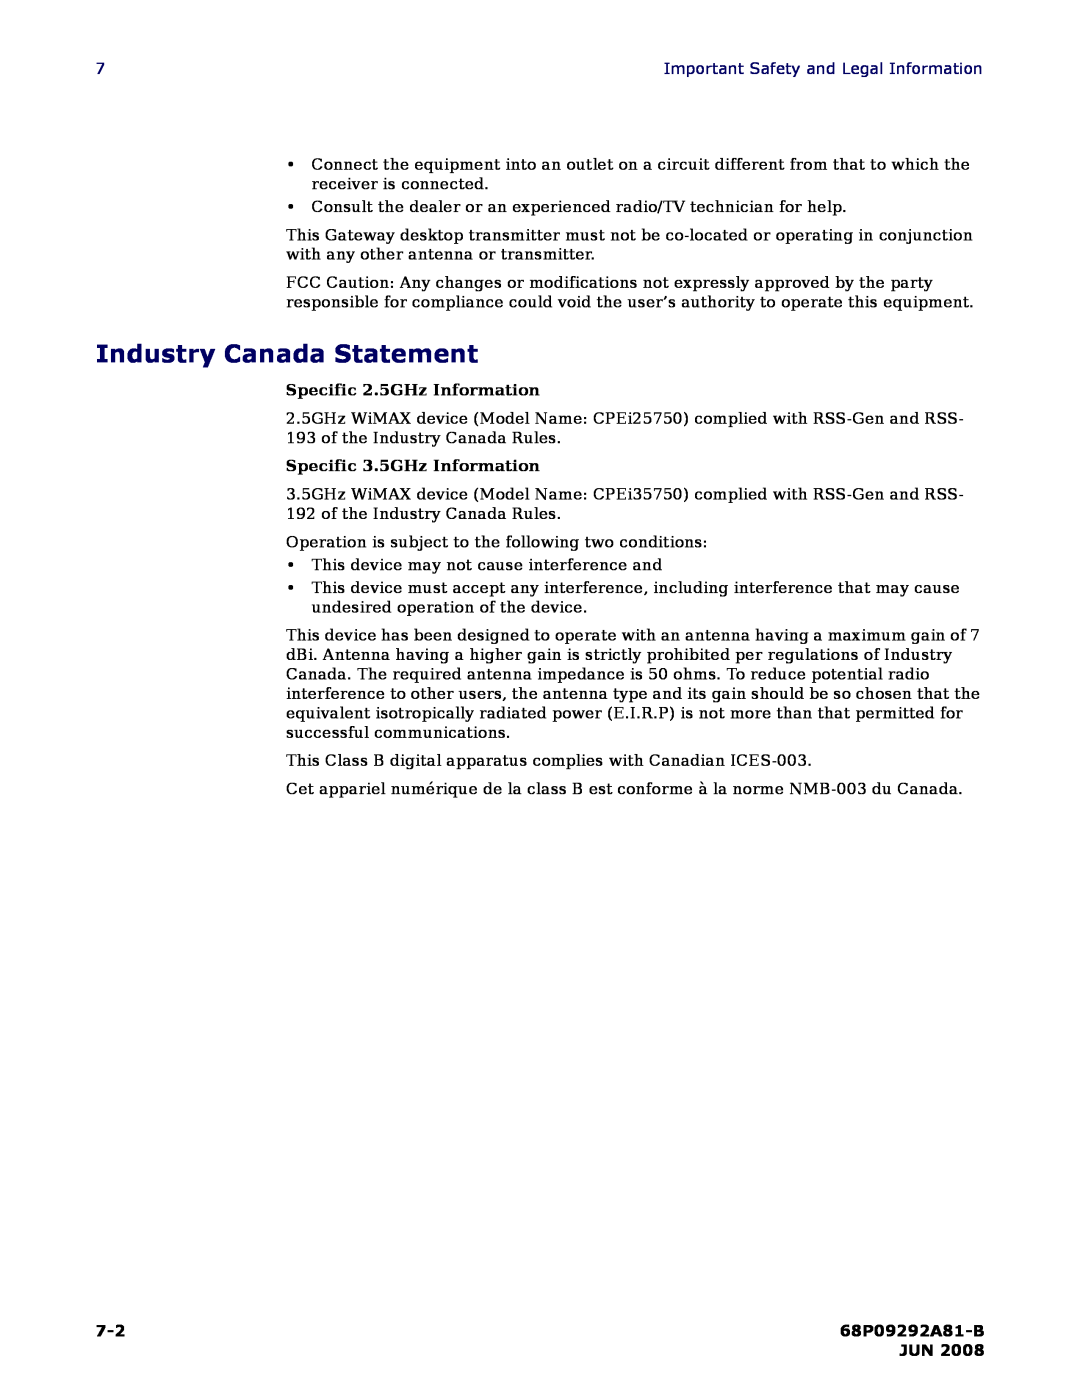 Motorola CPEI 750 manual Industry Canada Statement, Specific 2.5GHz Information, Specific 3.5GHz Information, 68P09292A81-B 